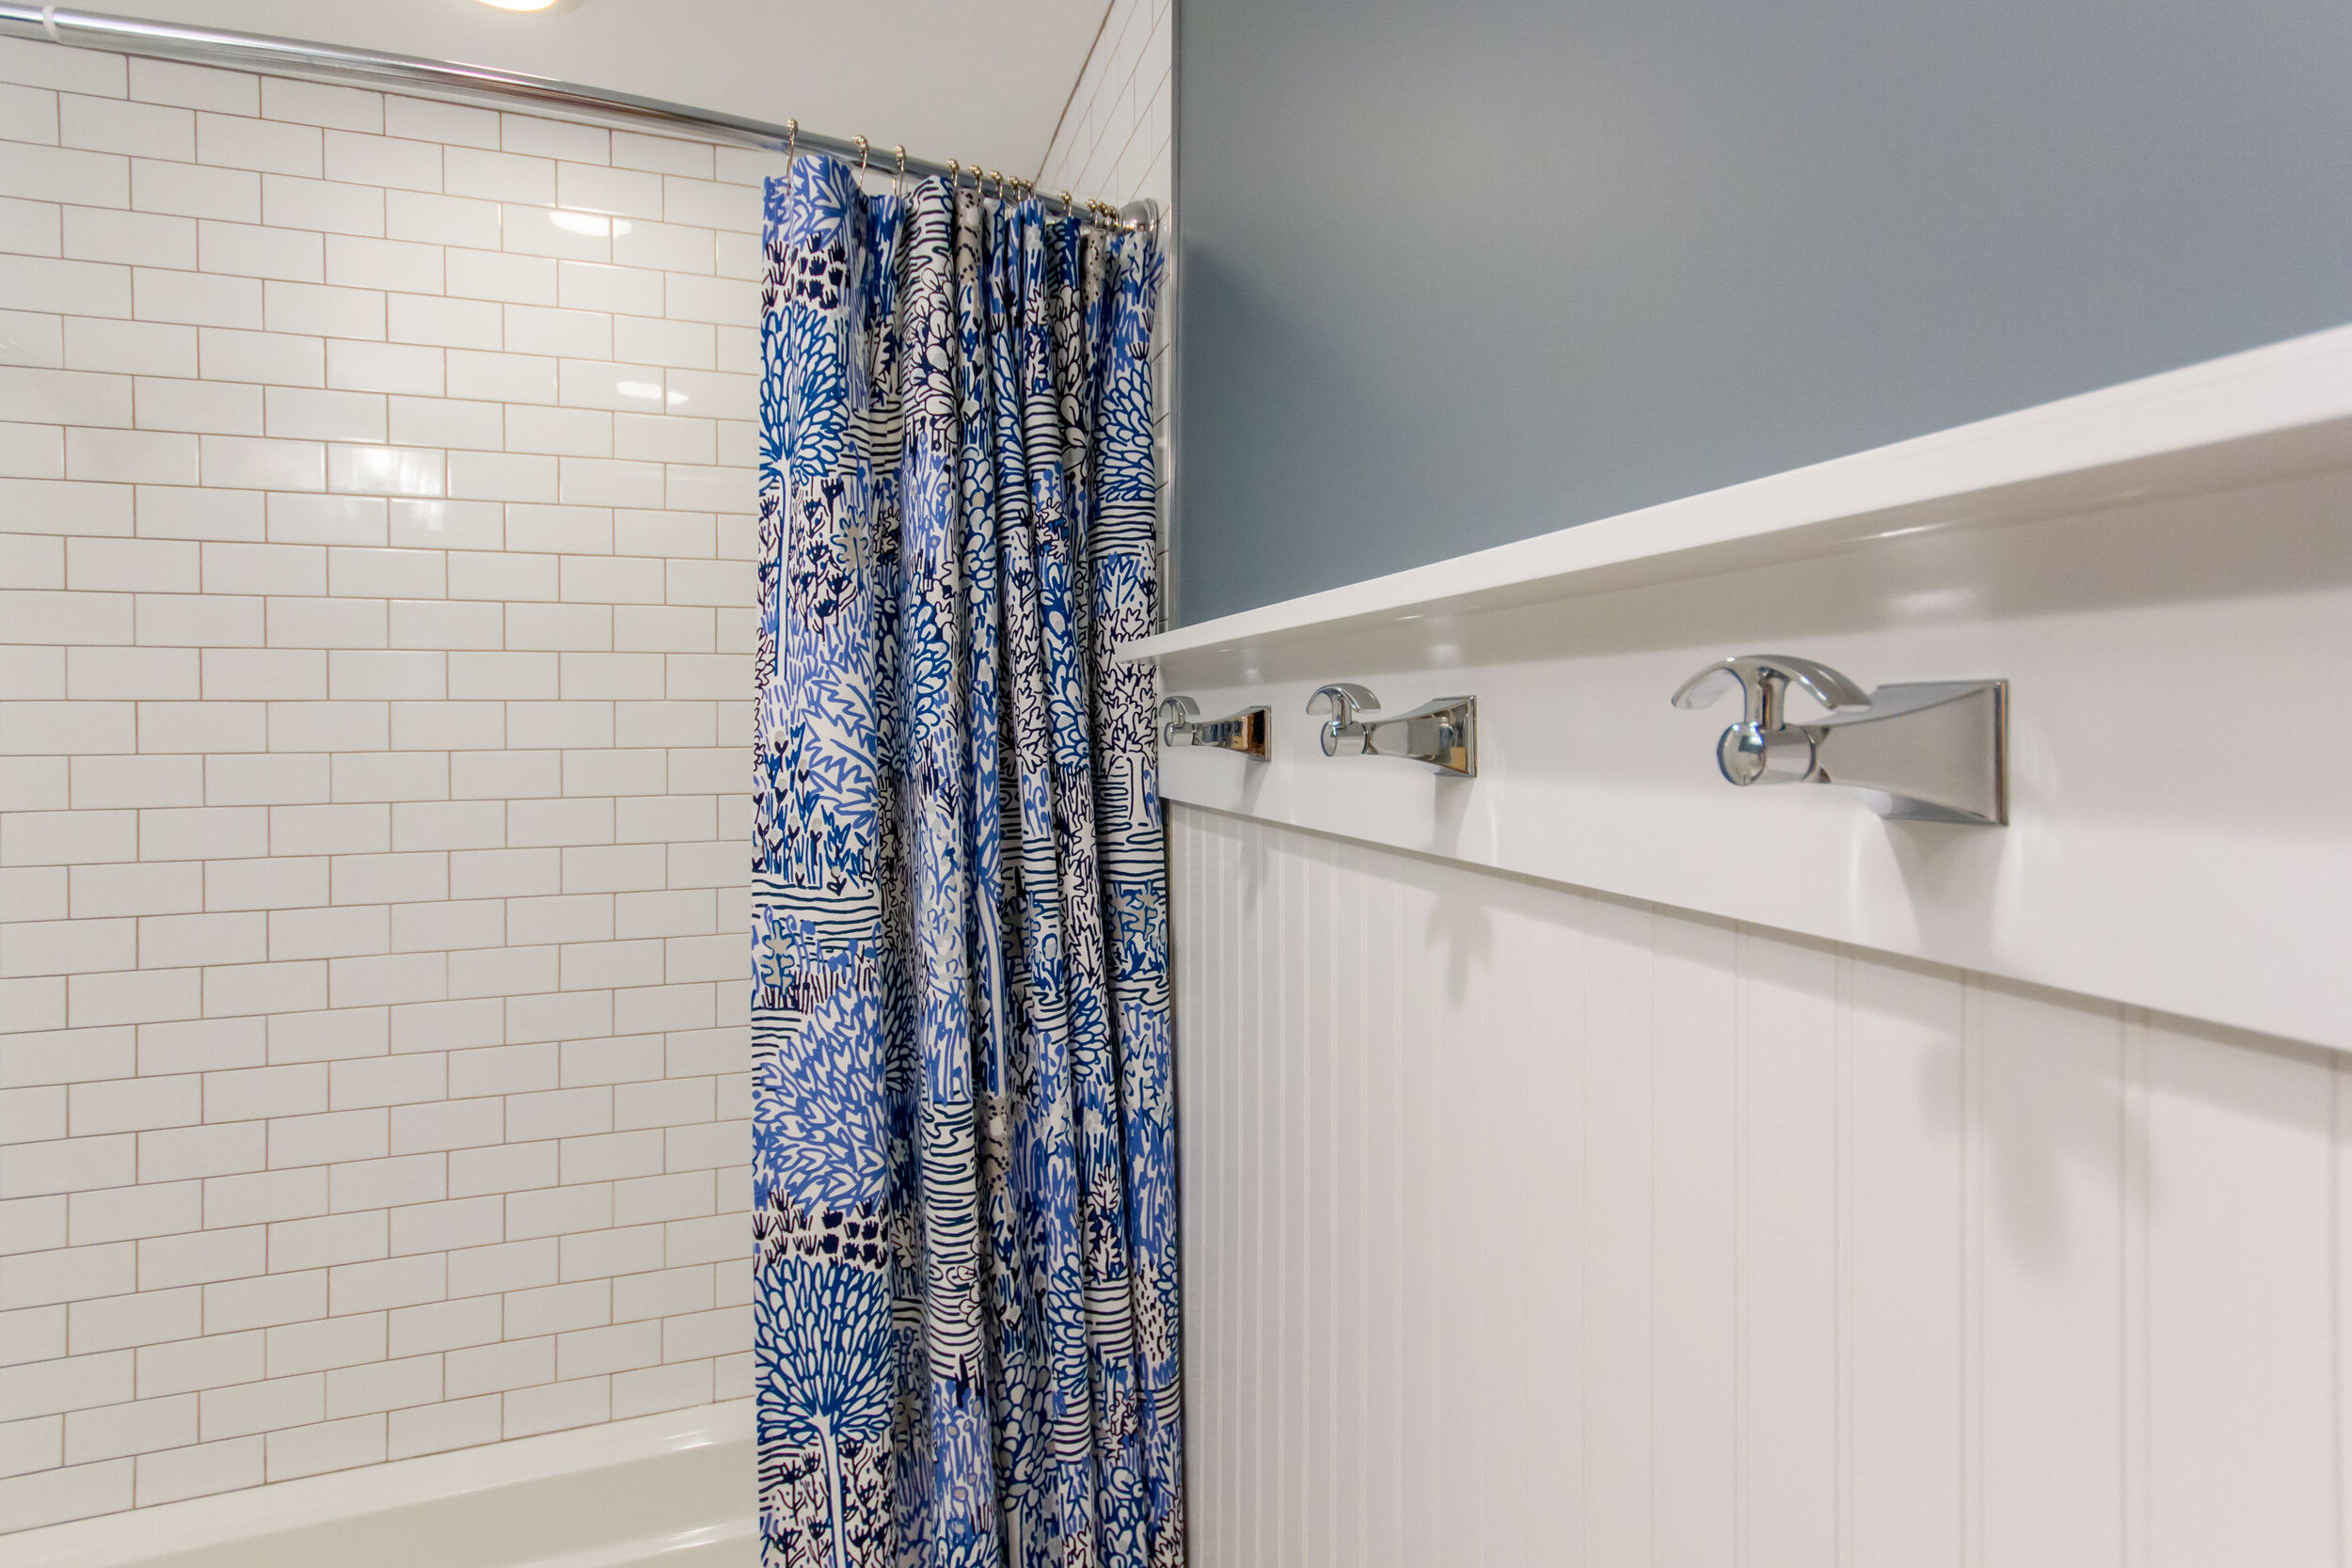 Classic Chicago Bathroom Remoodel, Chicago El Shower Curtain